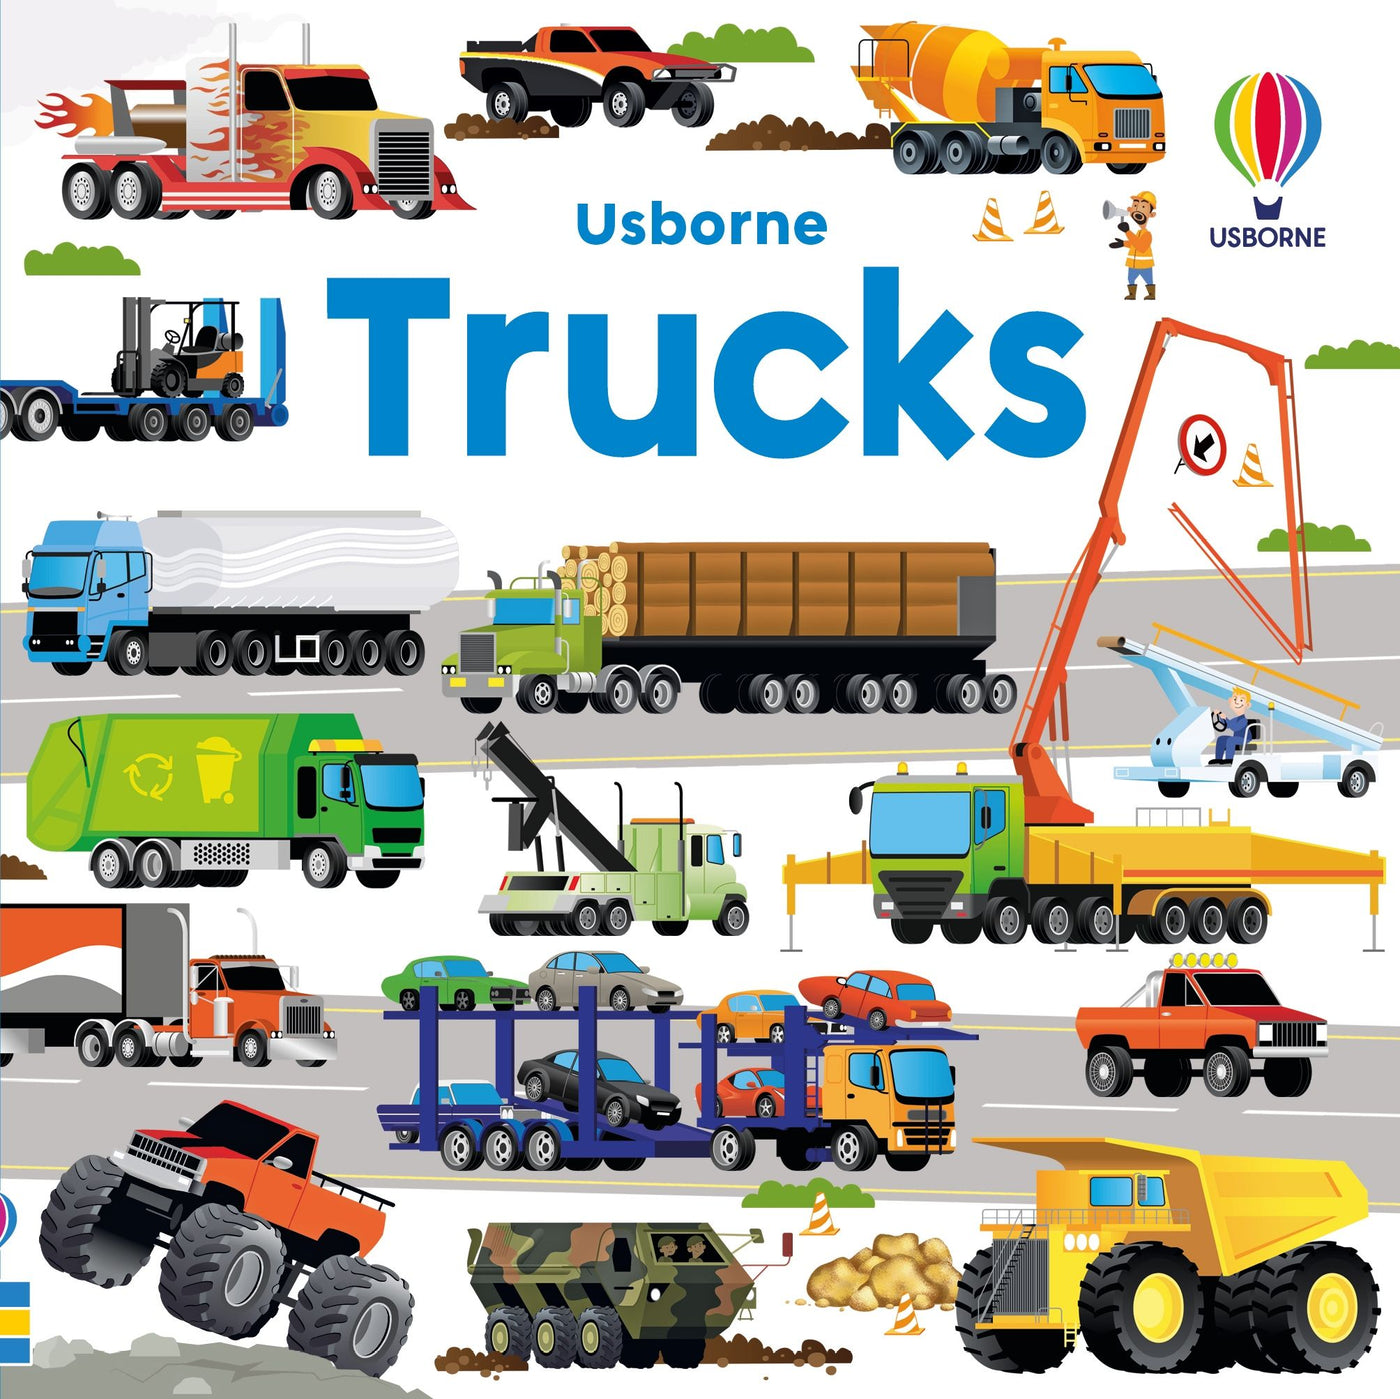 Usborne Book and Jigsaw Trucks - Paperback | Usborne